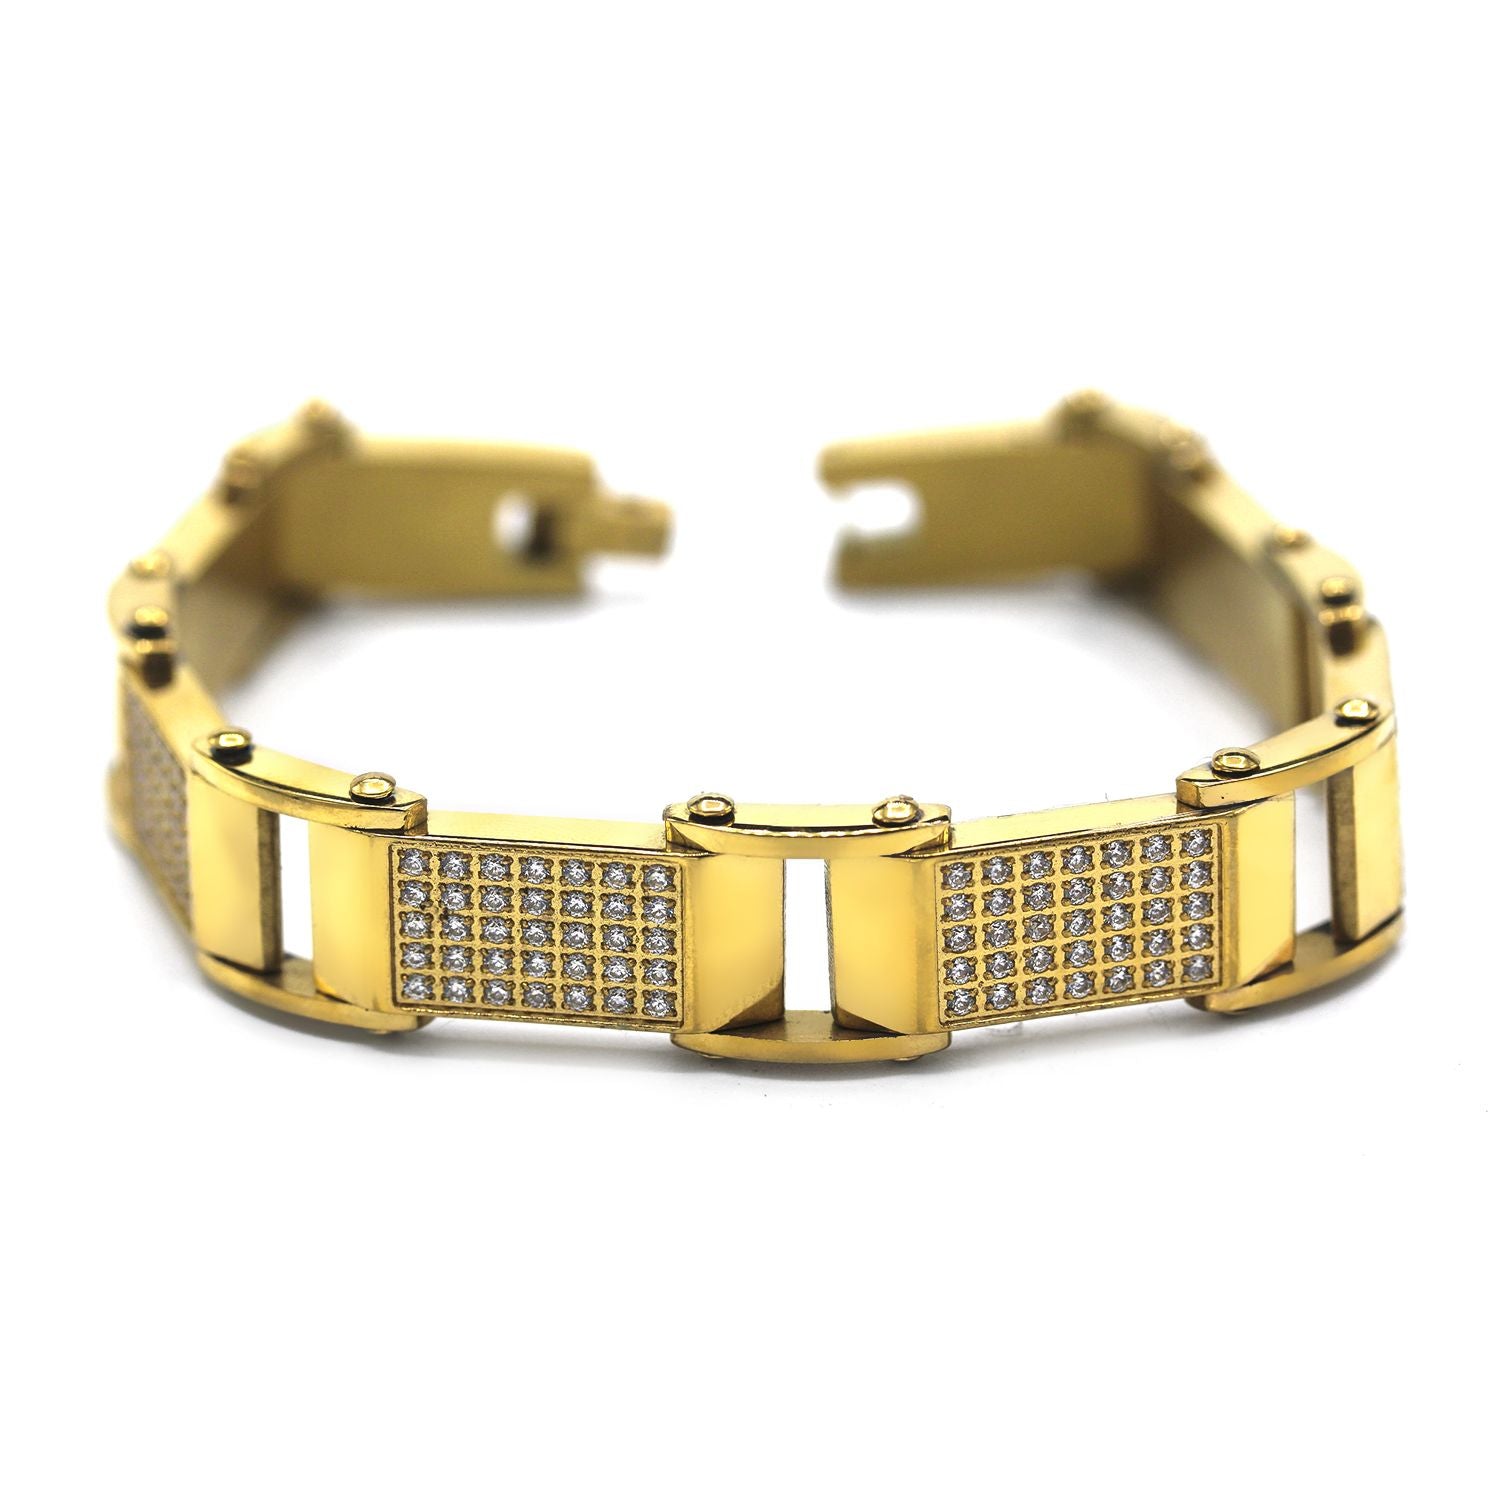 Cubic Zirconia Men's Bracelet 14K Gold Plated Wrist Band Fashion Jewelry 8.5"